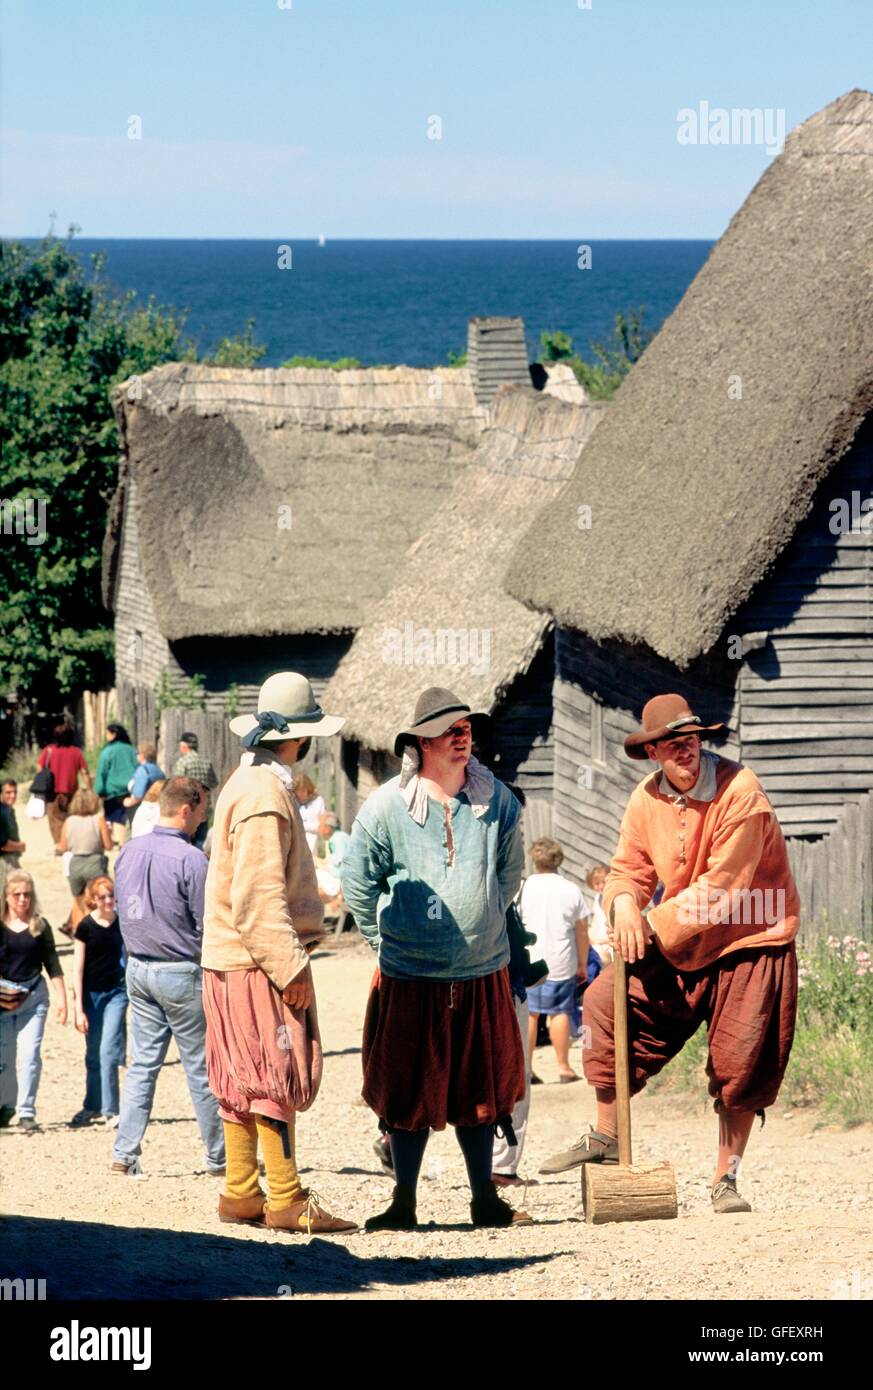 Plimouth Plantation. Reconstruction of Pilgrim Fathers early English settlement. Plymouth, Massachusetts, New England, USA Stock Photo